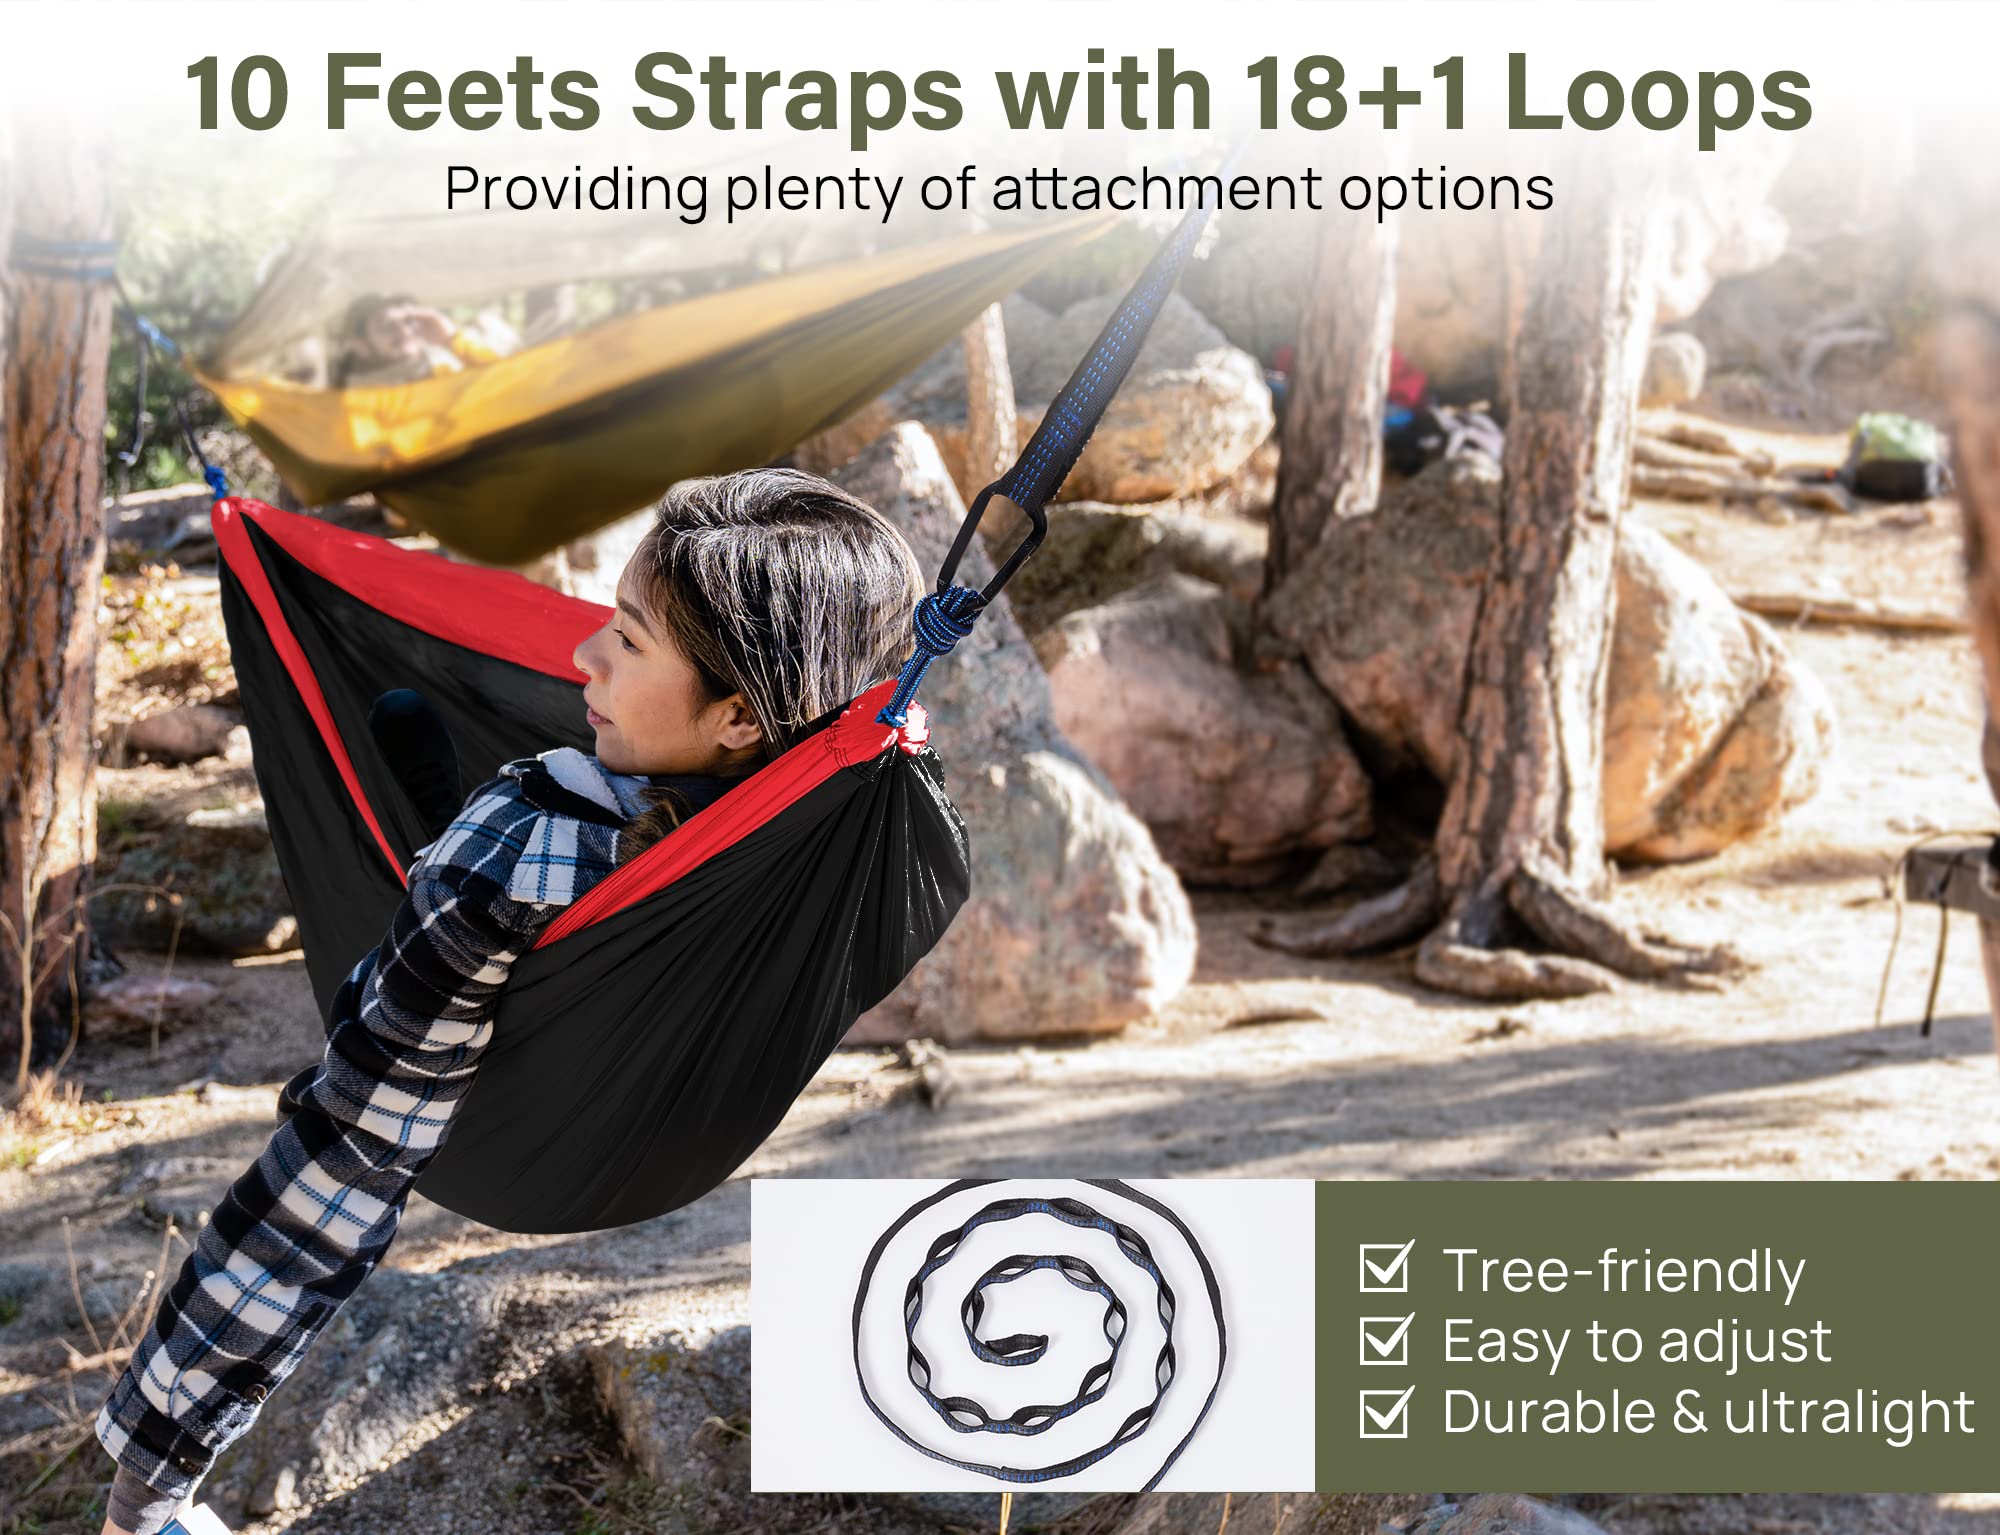 Kootek Camping Hammock Double Portable Hammocks with 2 Tree Straps, Lightweight Nylon Parachute Hammocks for Backpacking, Travel, Beach, Backyard, Patio, Hiking (Black & Red, Large)